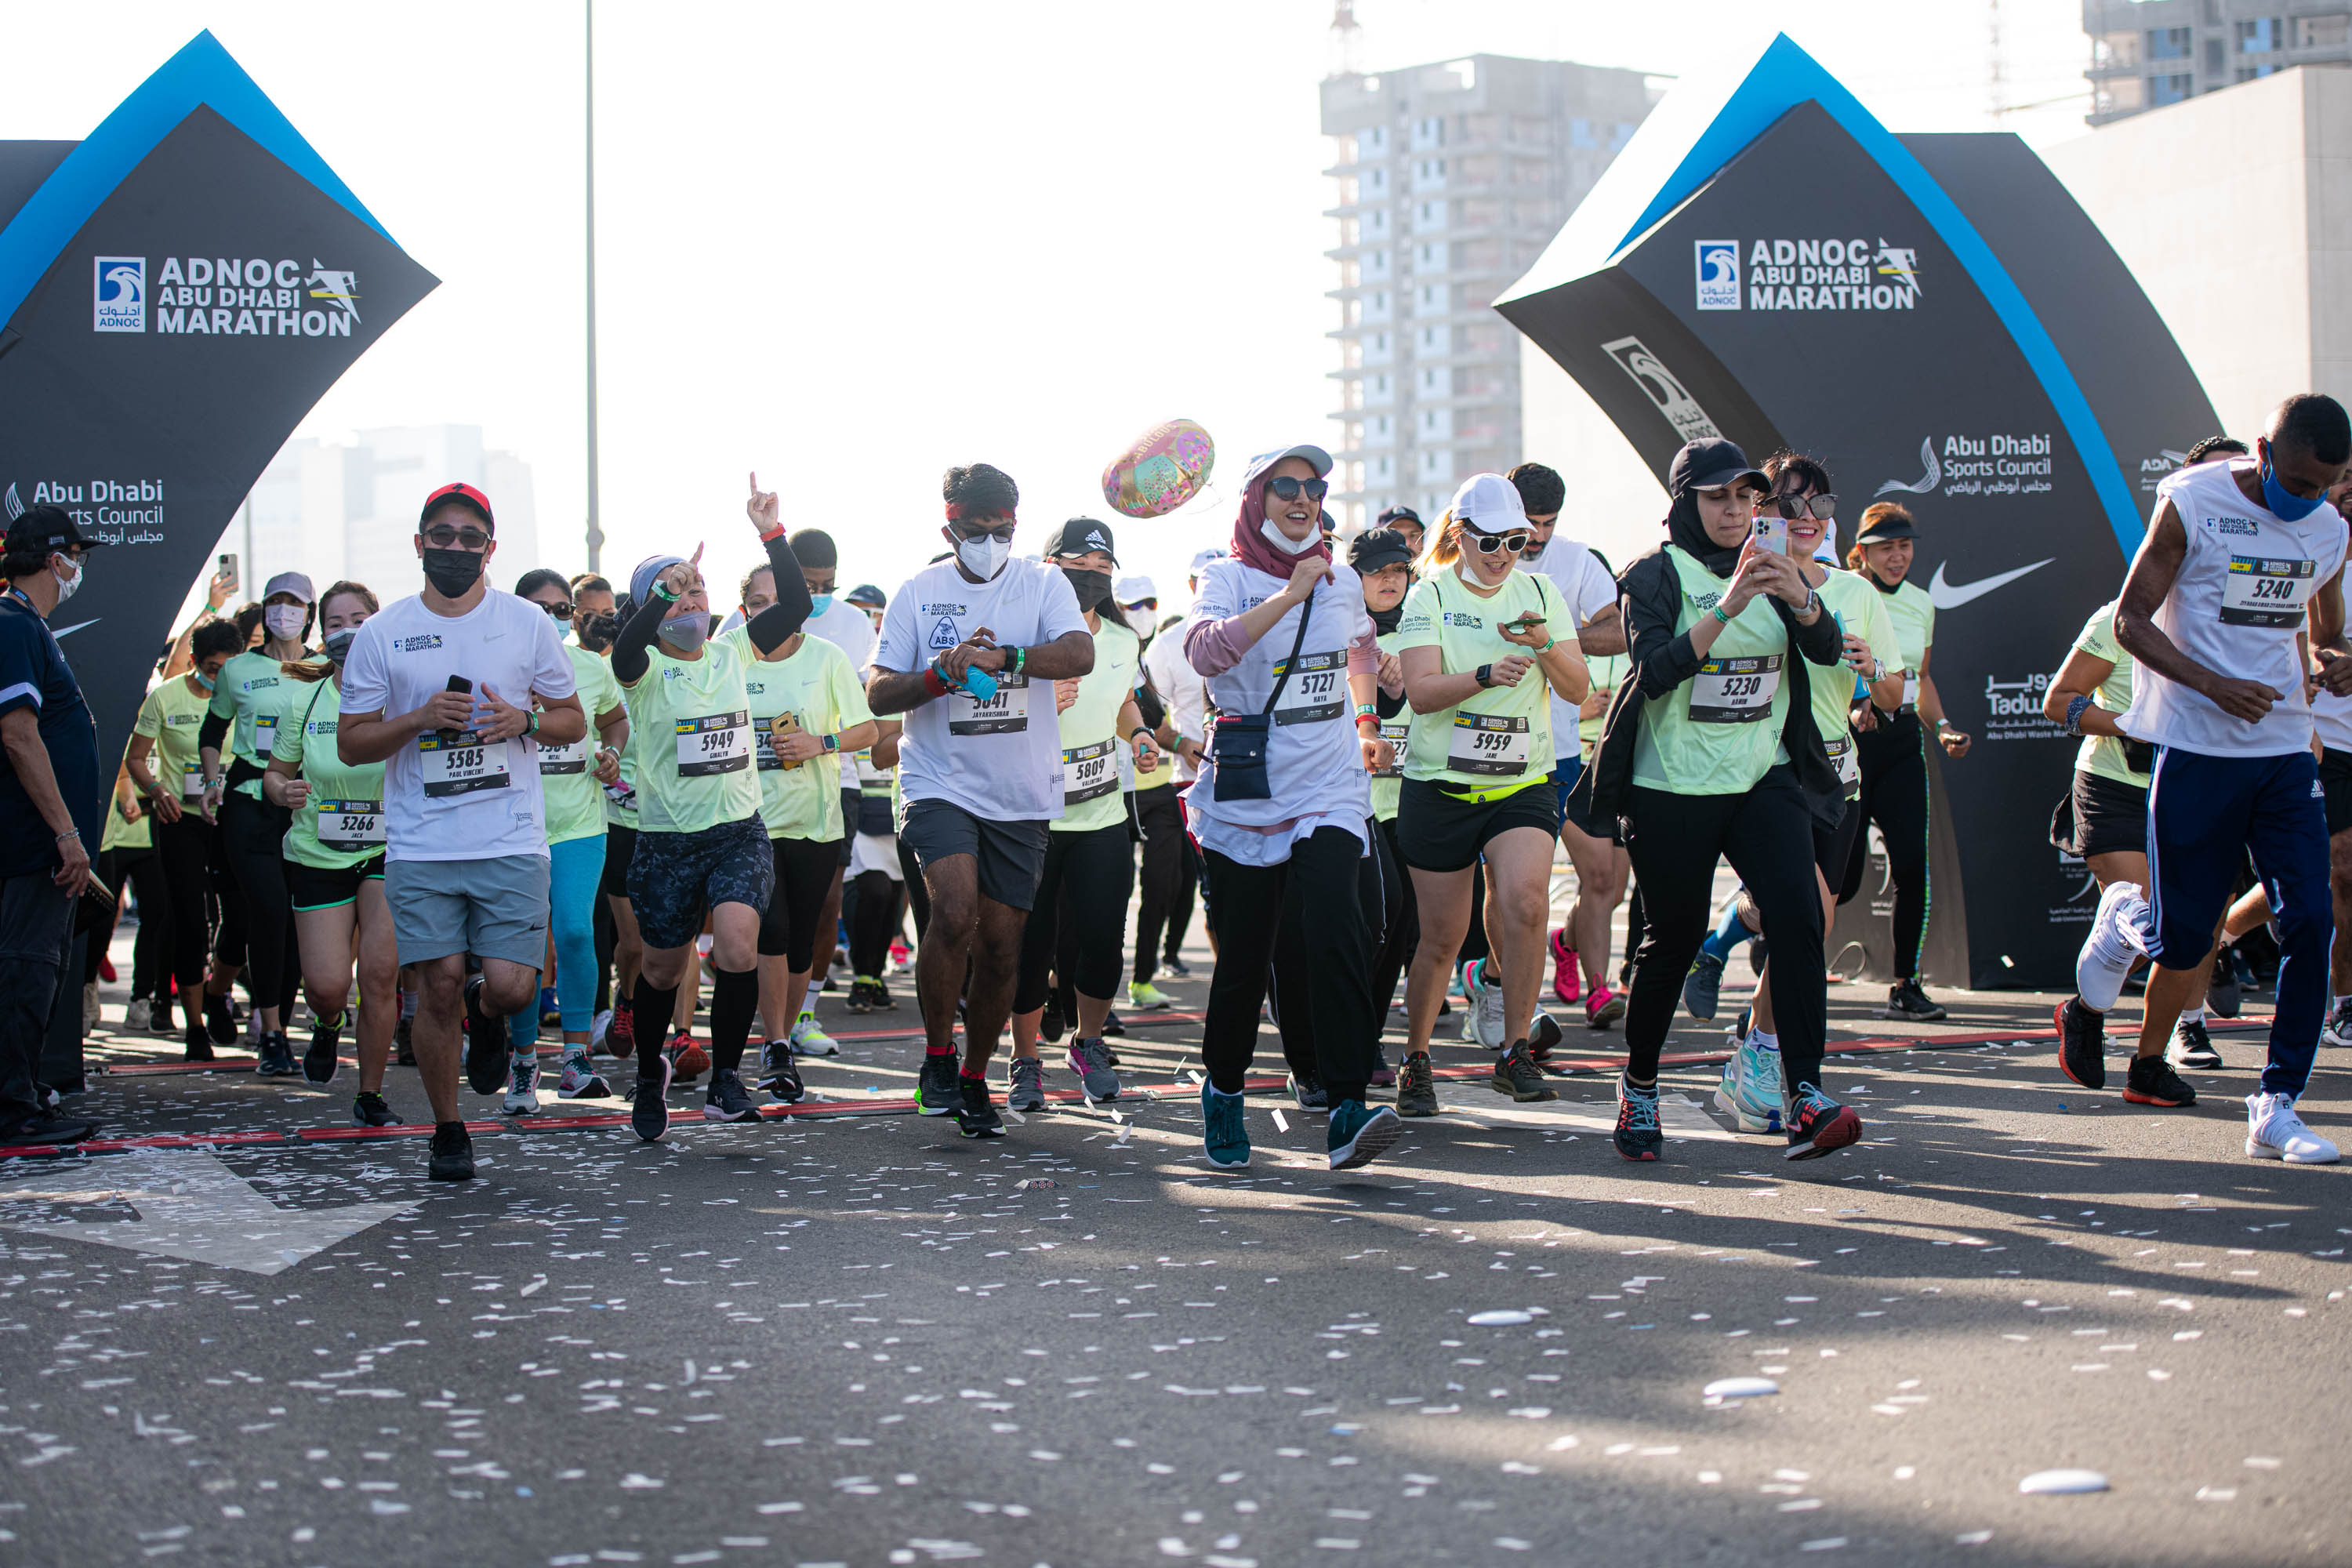 Abu Dhabi marathon sets out to double UAE’s running community Arab News